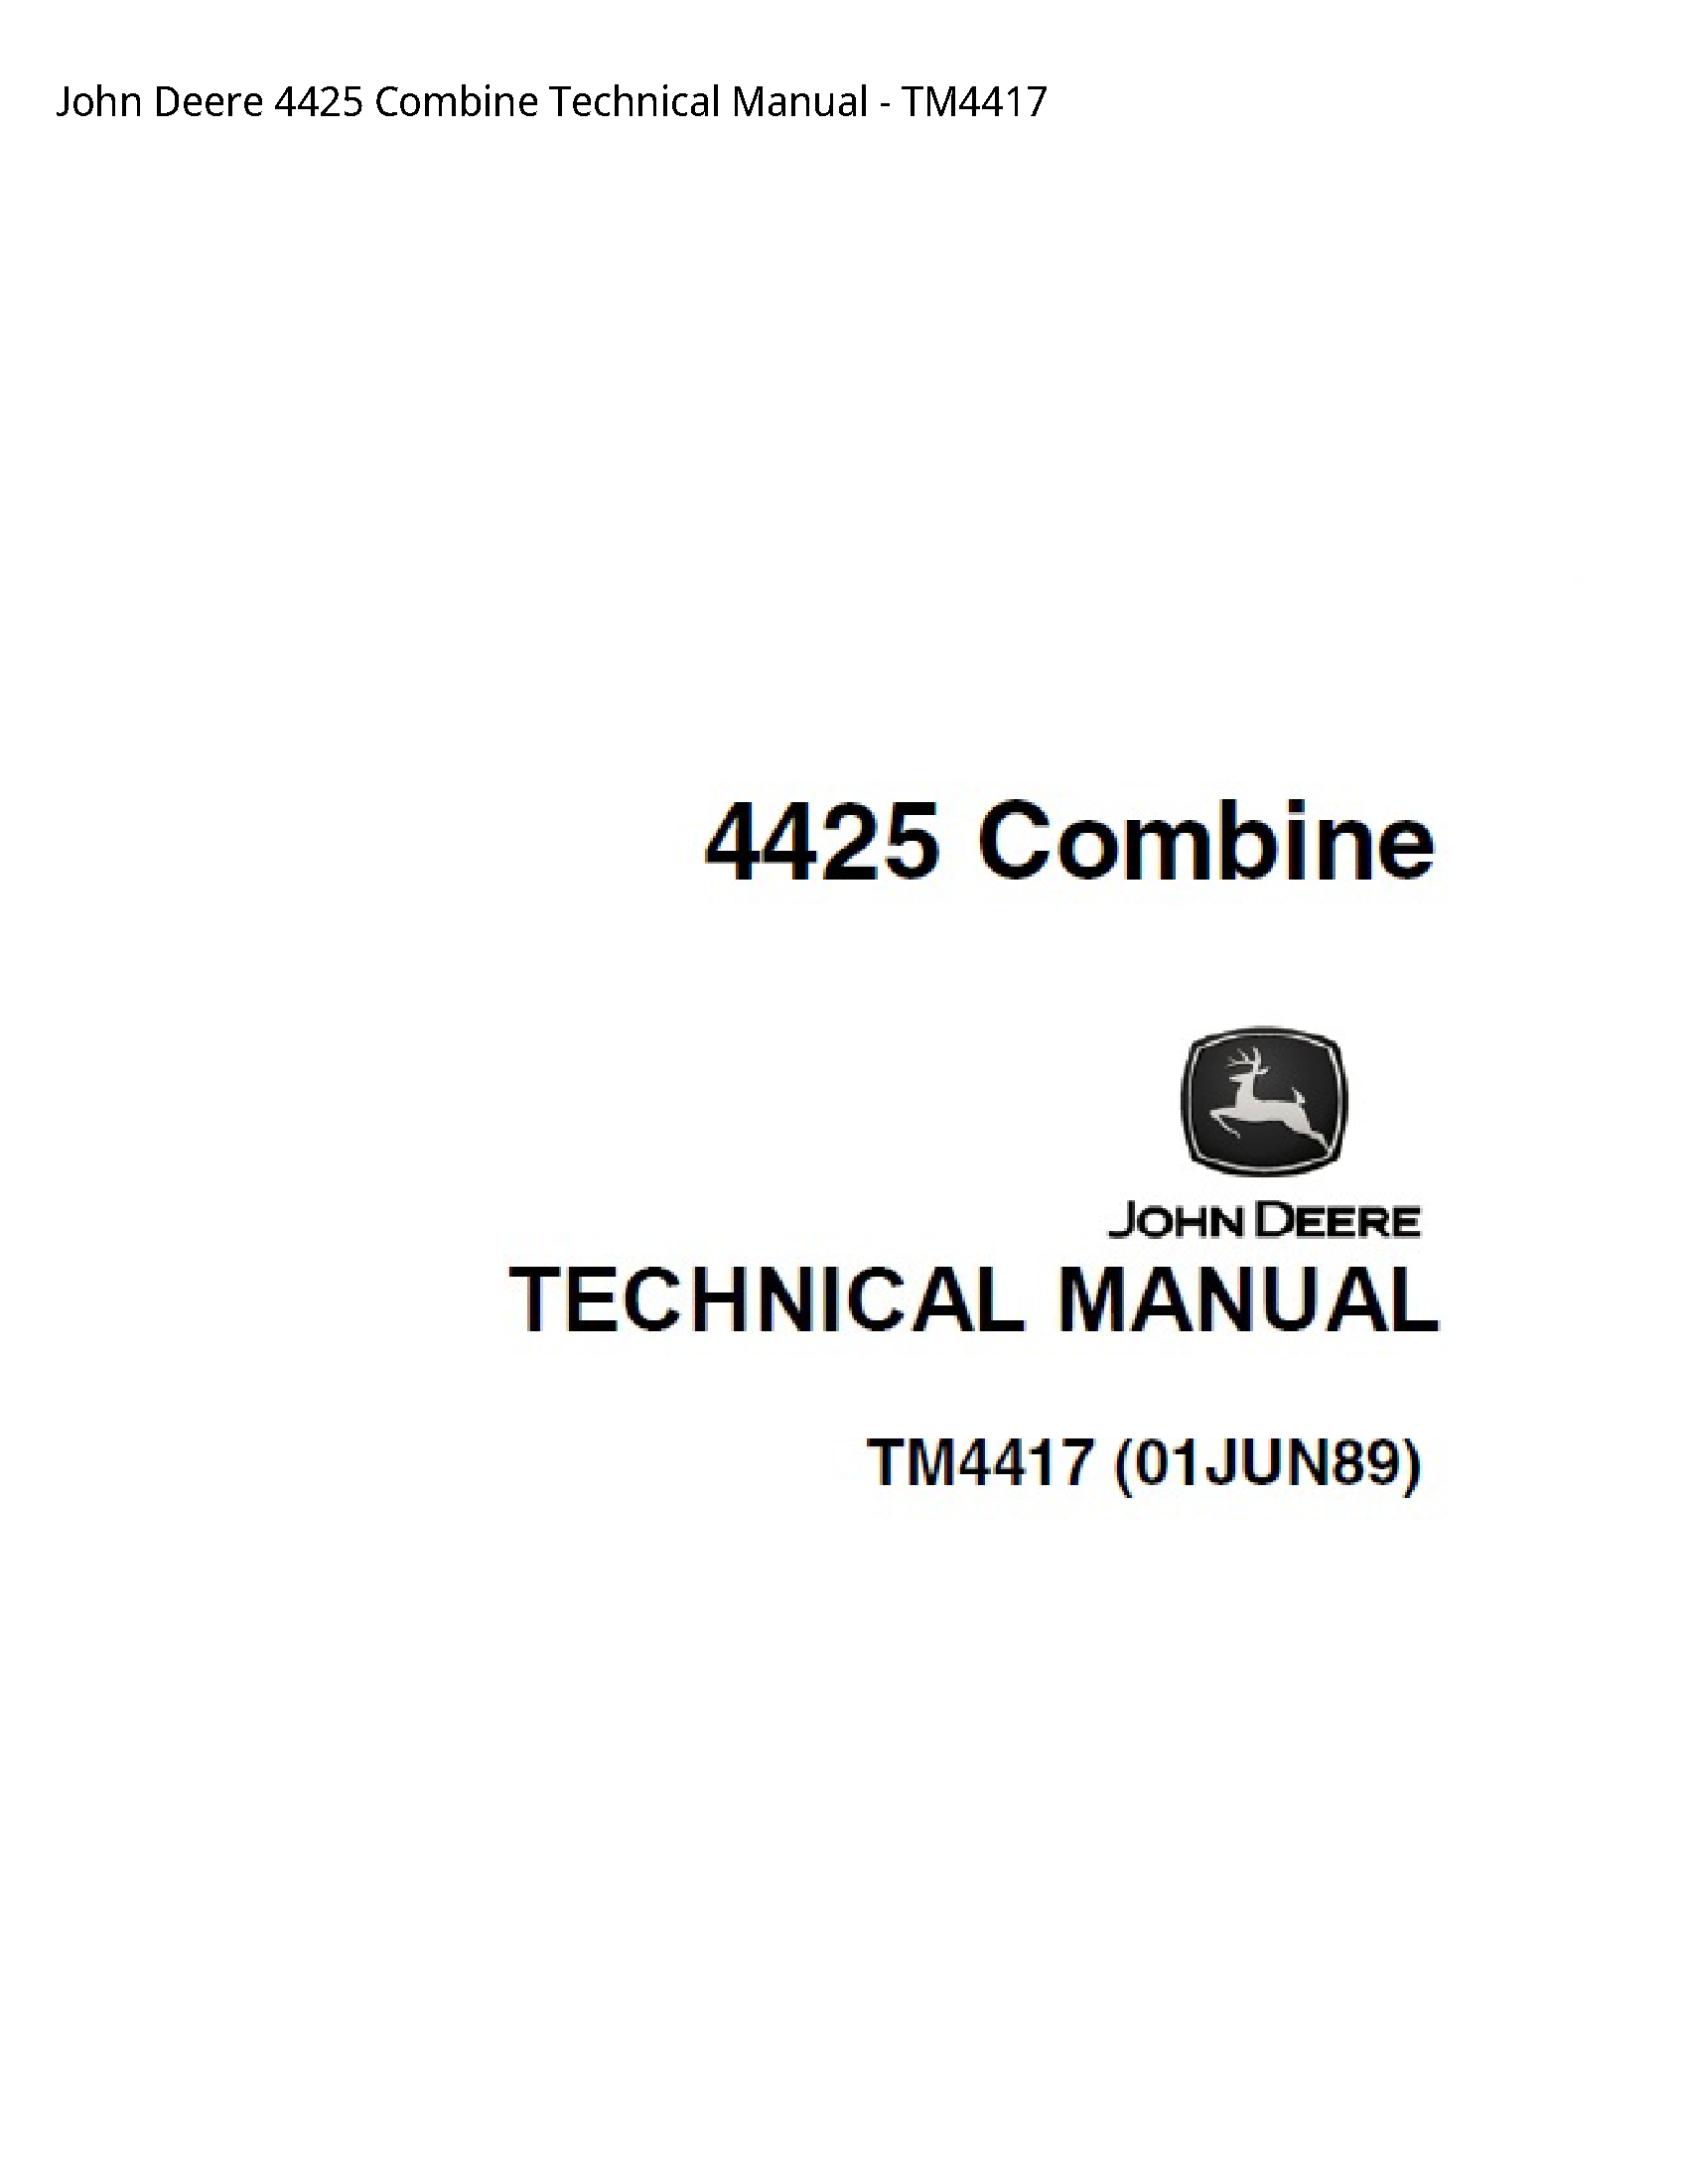 John Deere 4425 Combine Technical manual